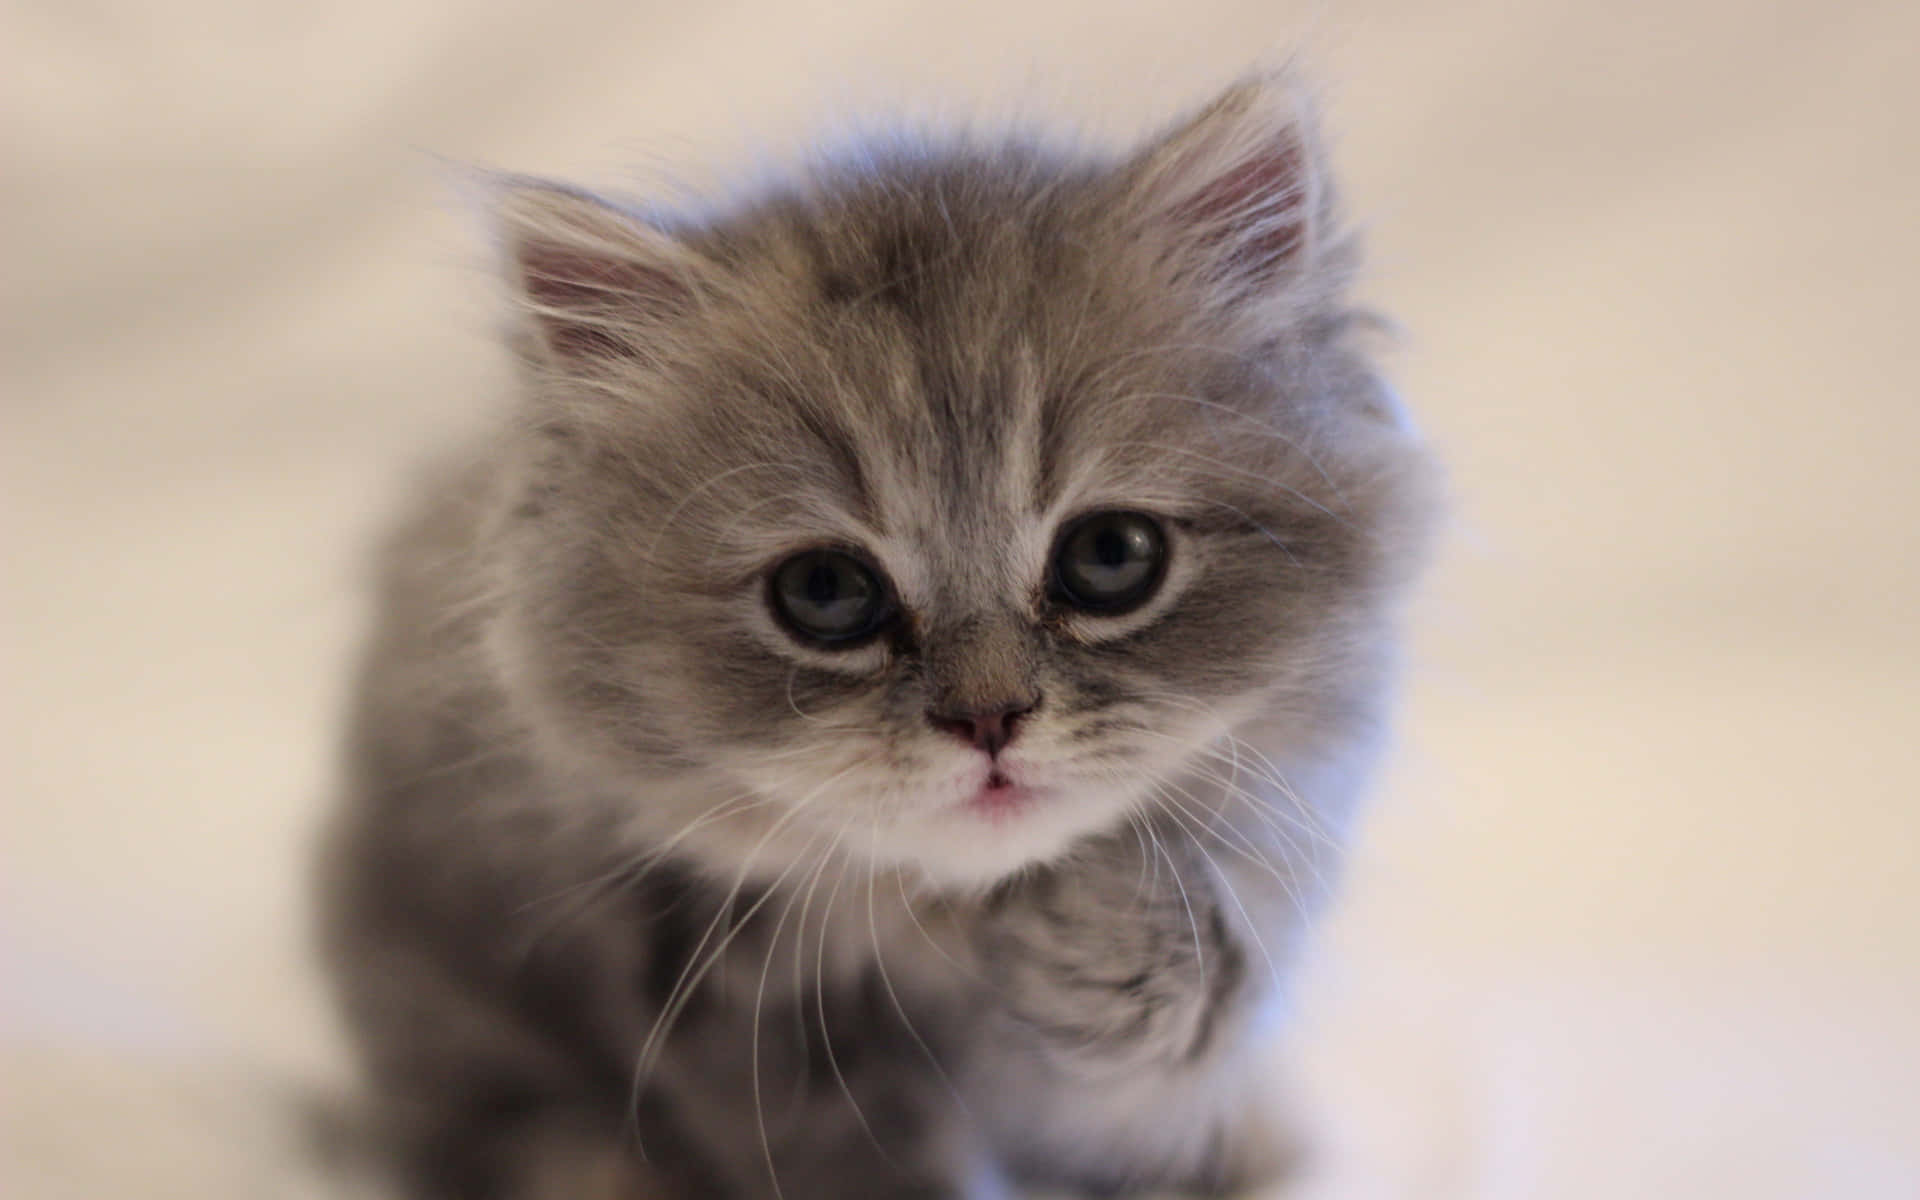 Image  "Cute Kitten Cat Enjoying Petting!"